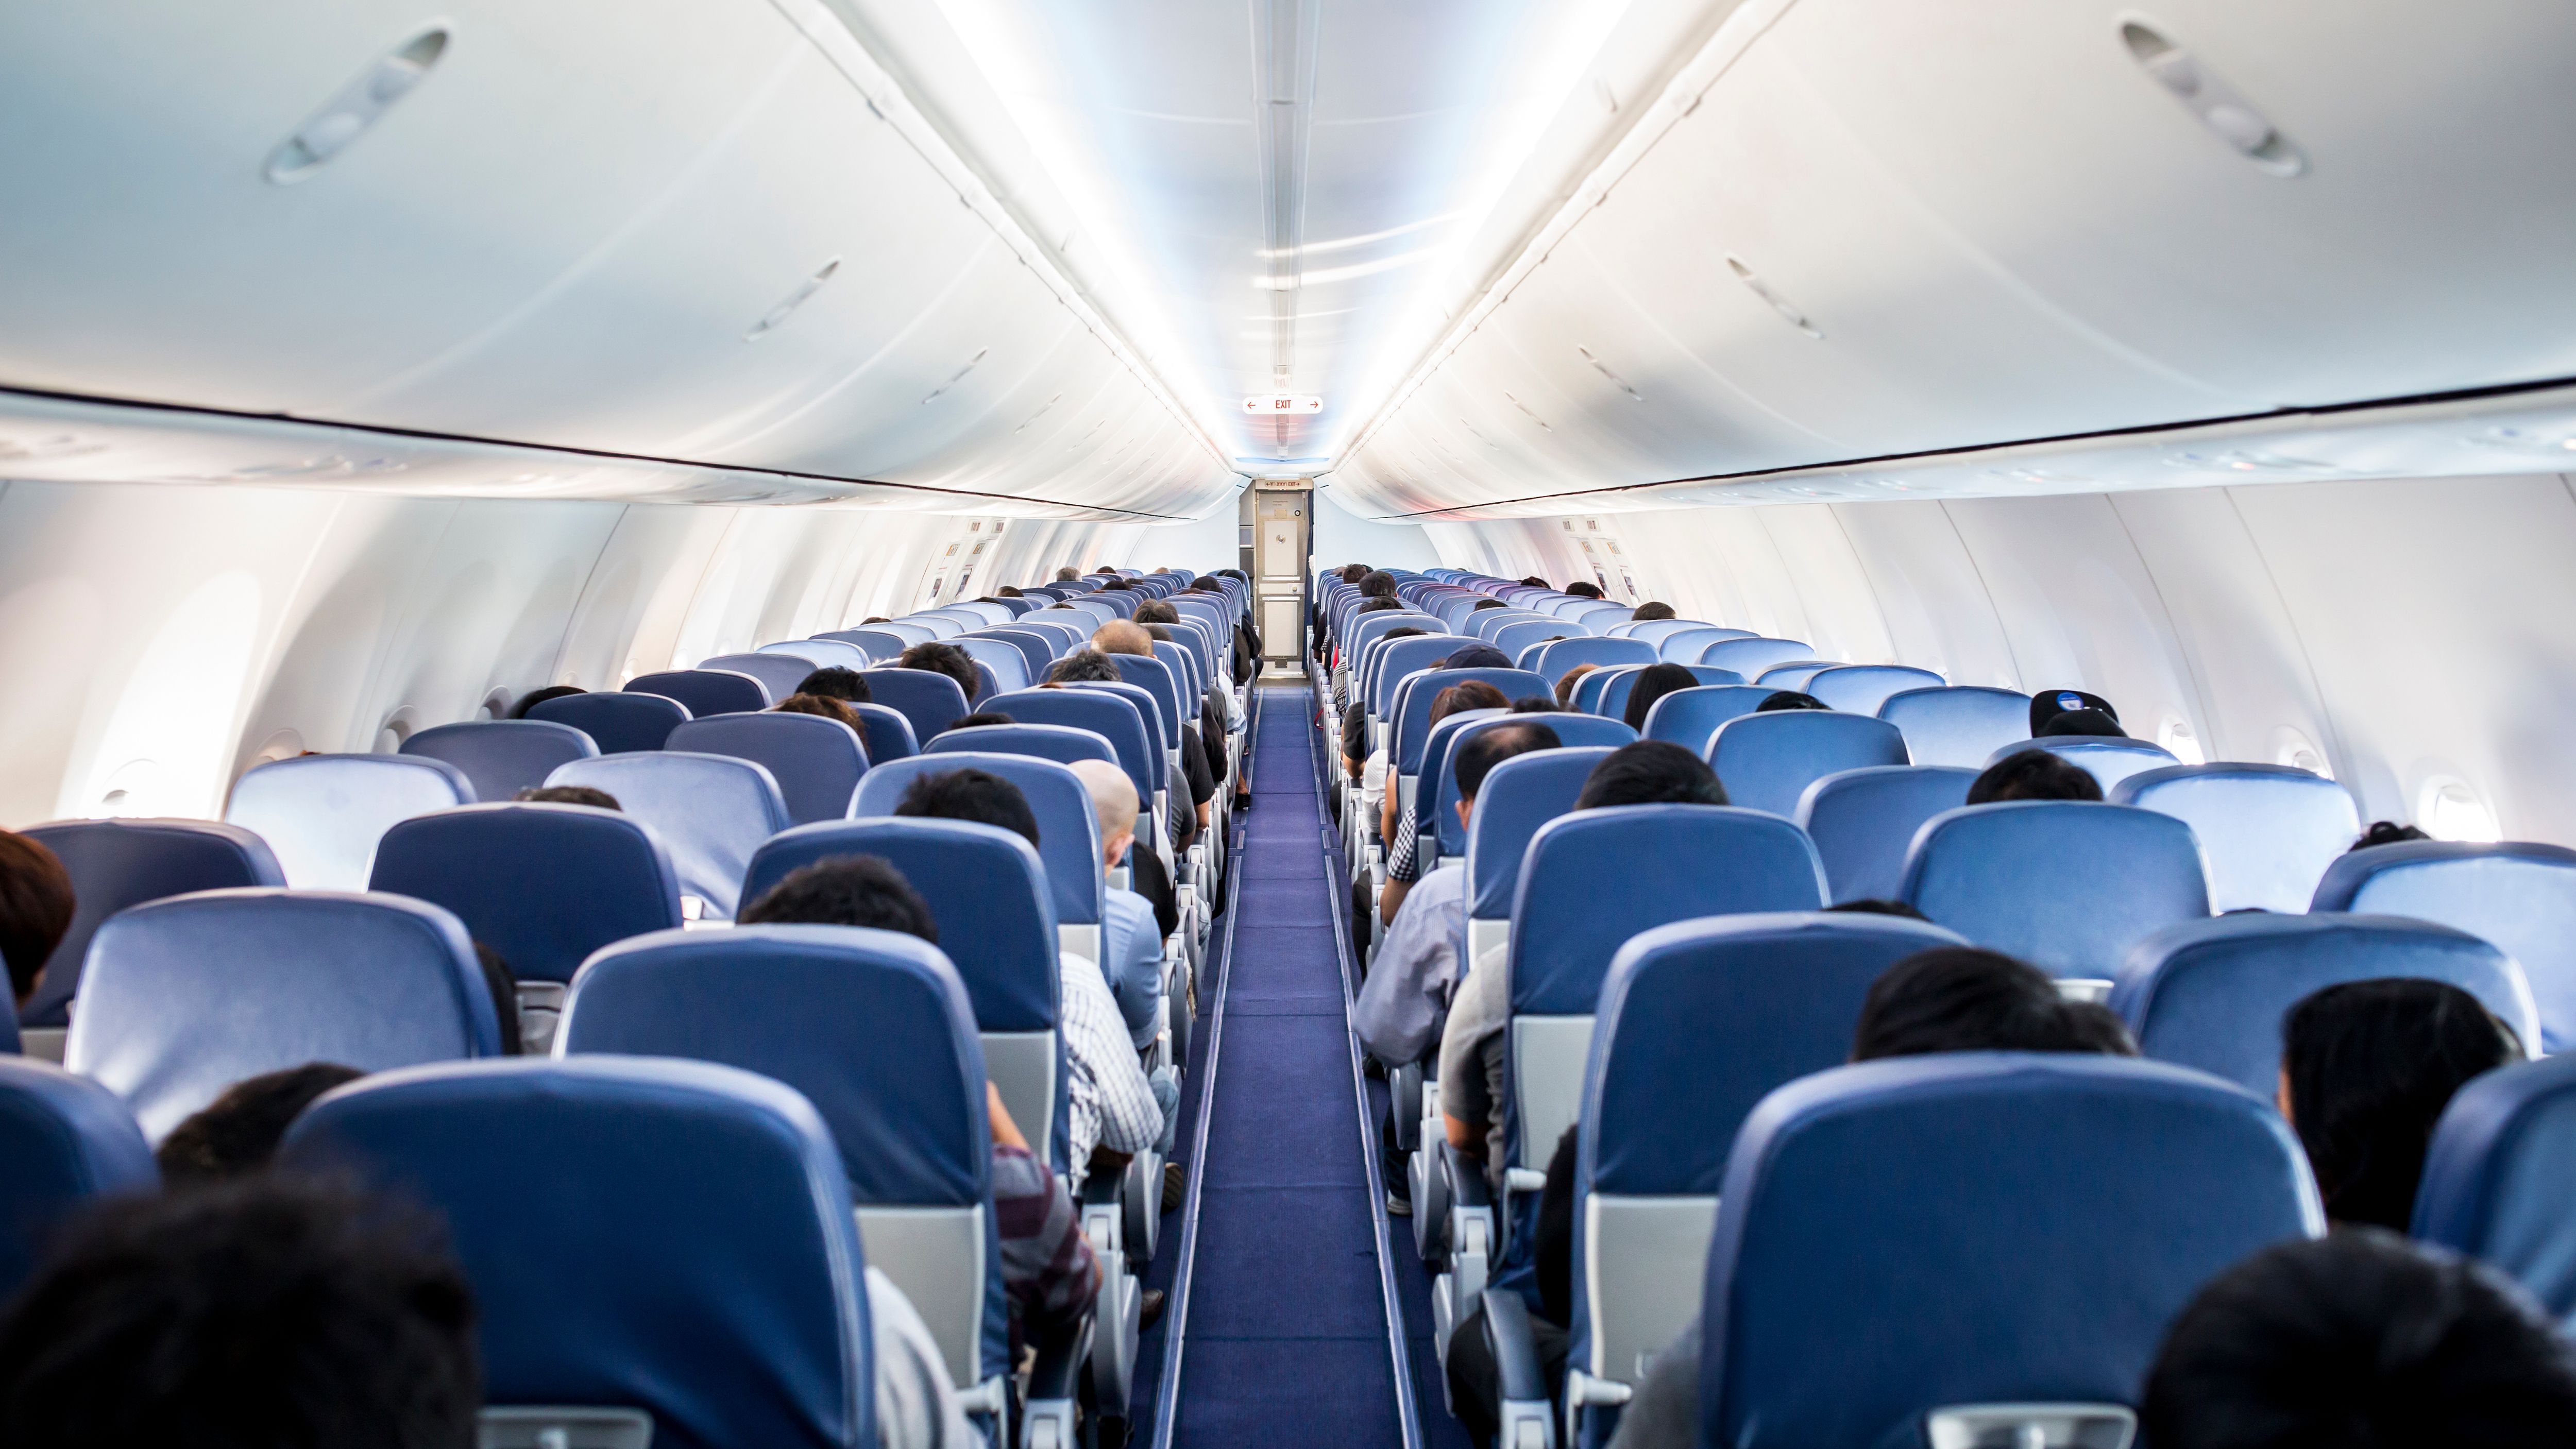 Inside an all economy single-aisle aircraft.